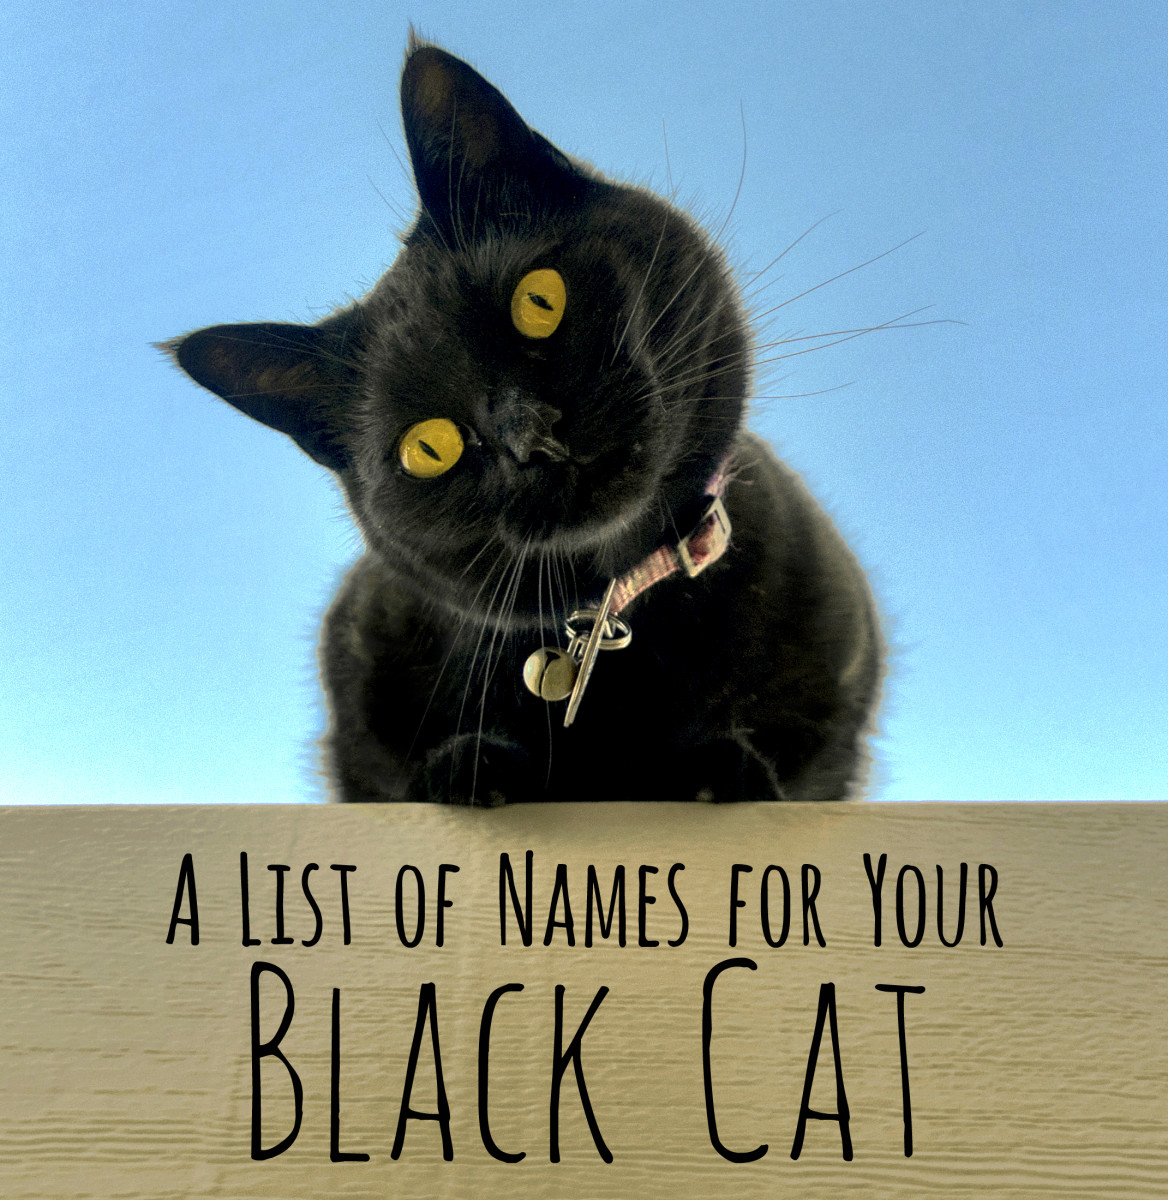 A list of black cat names